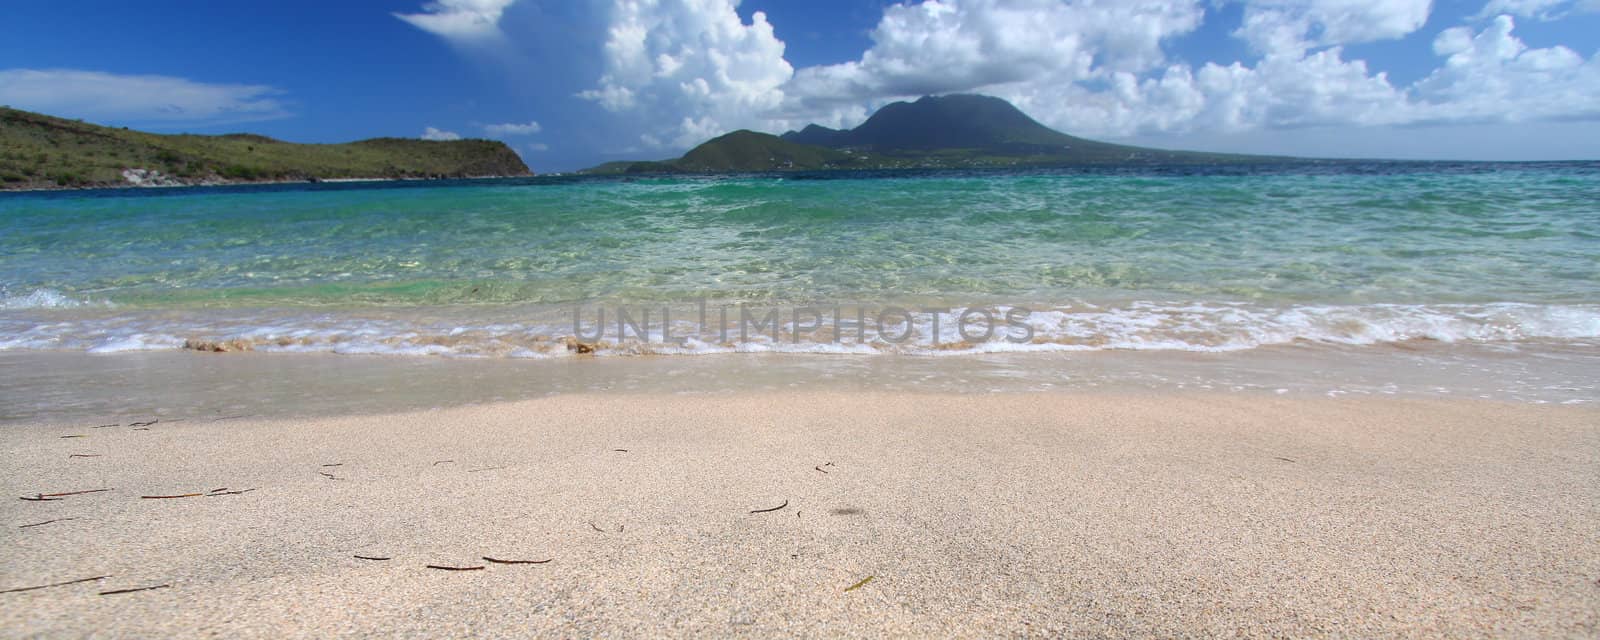 Waves wash ashore at Majors Bay Beach on the Caribbean island of Saint Kitts.